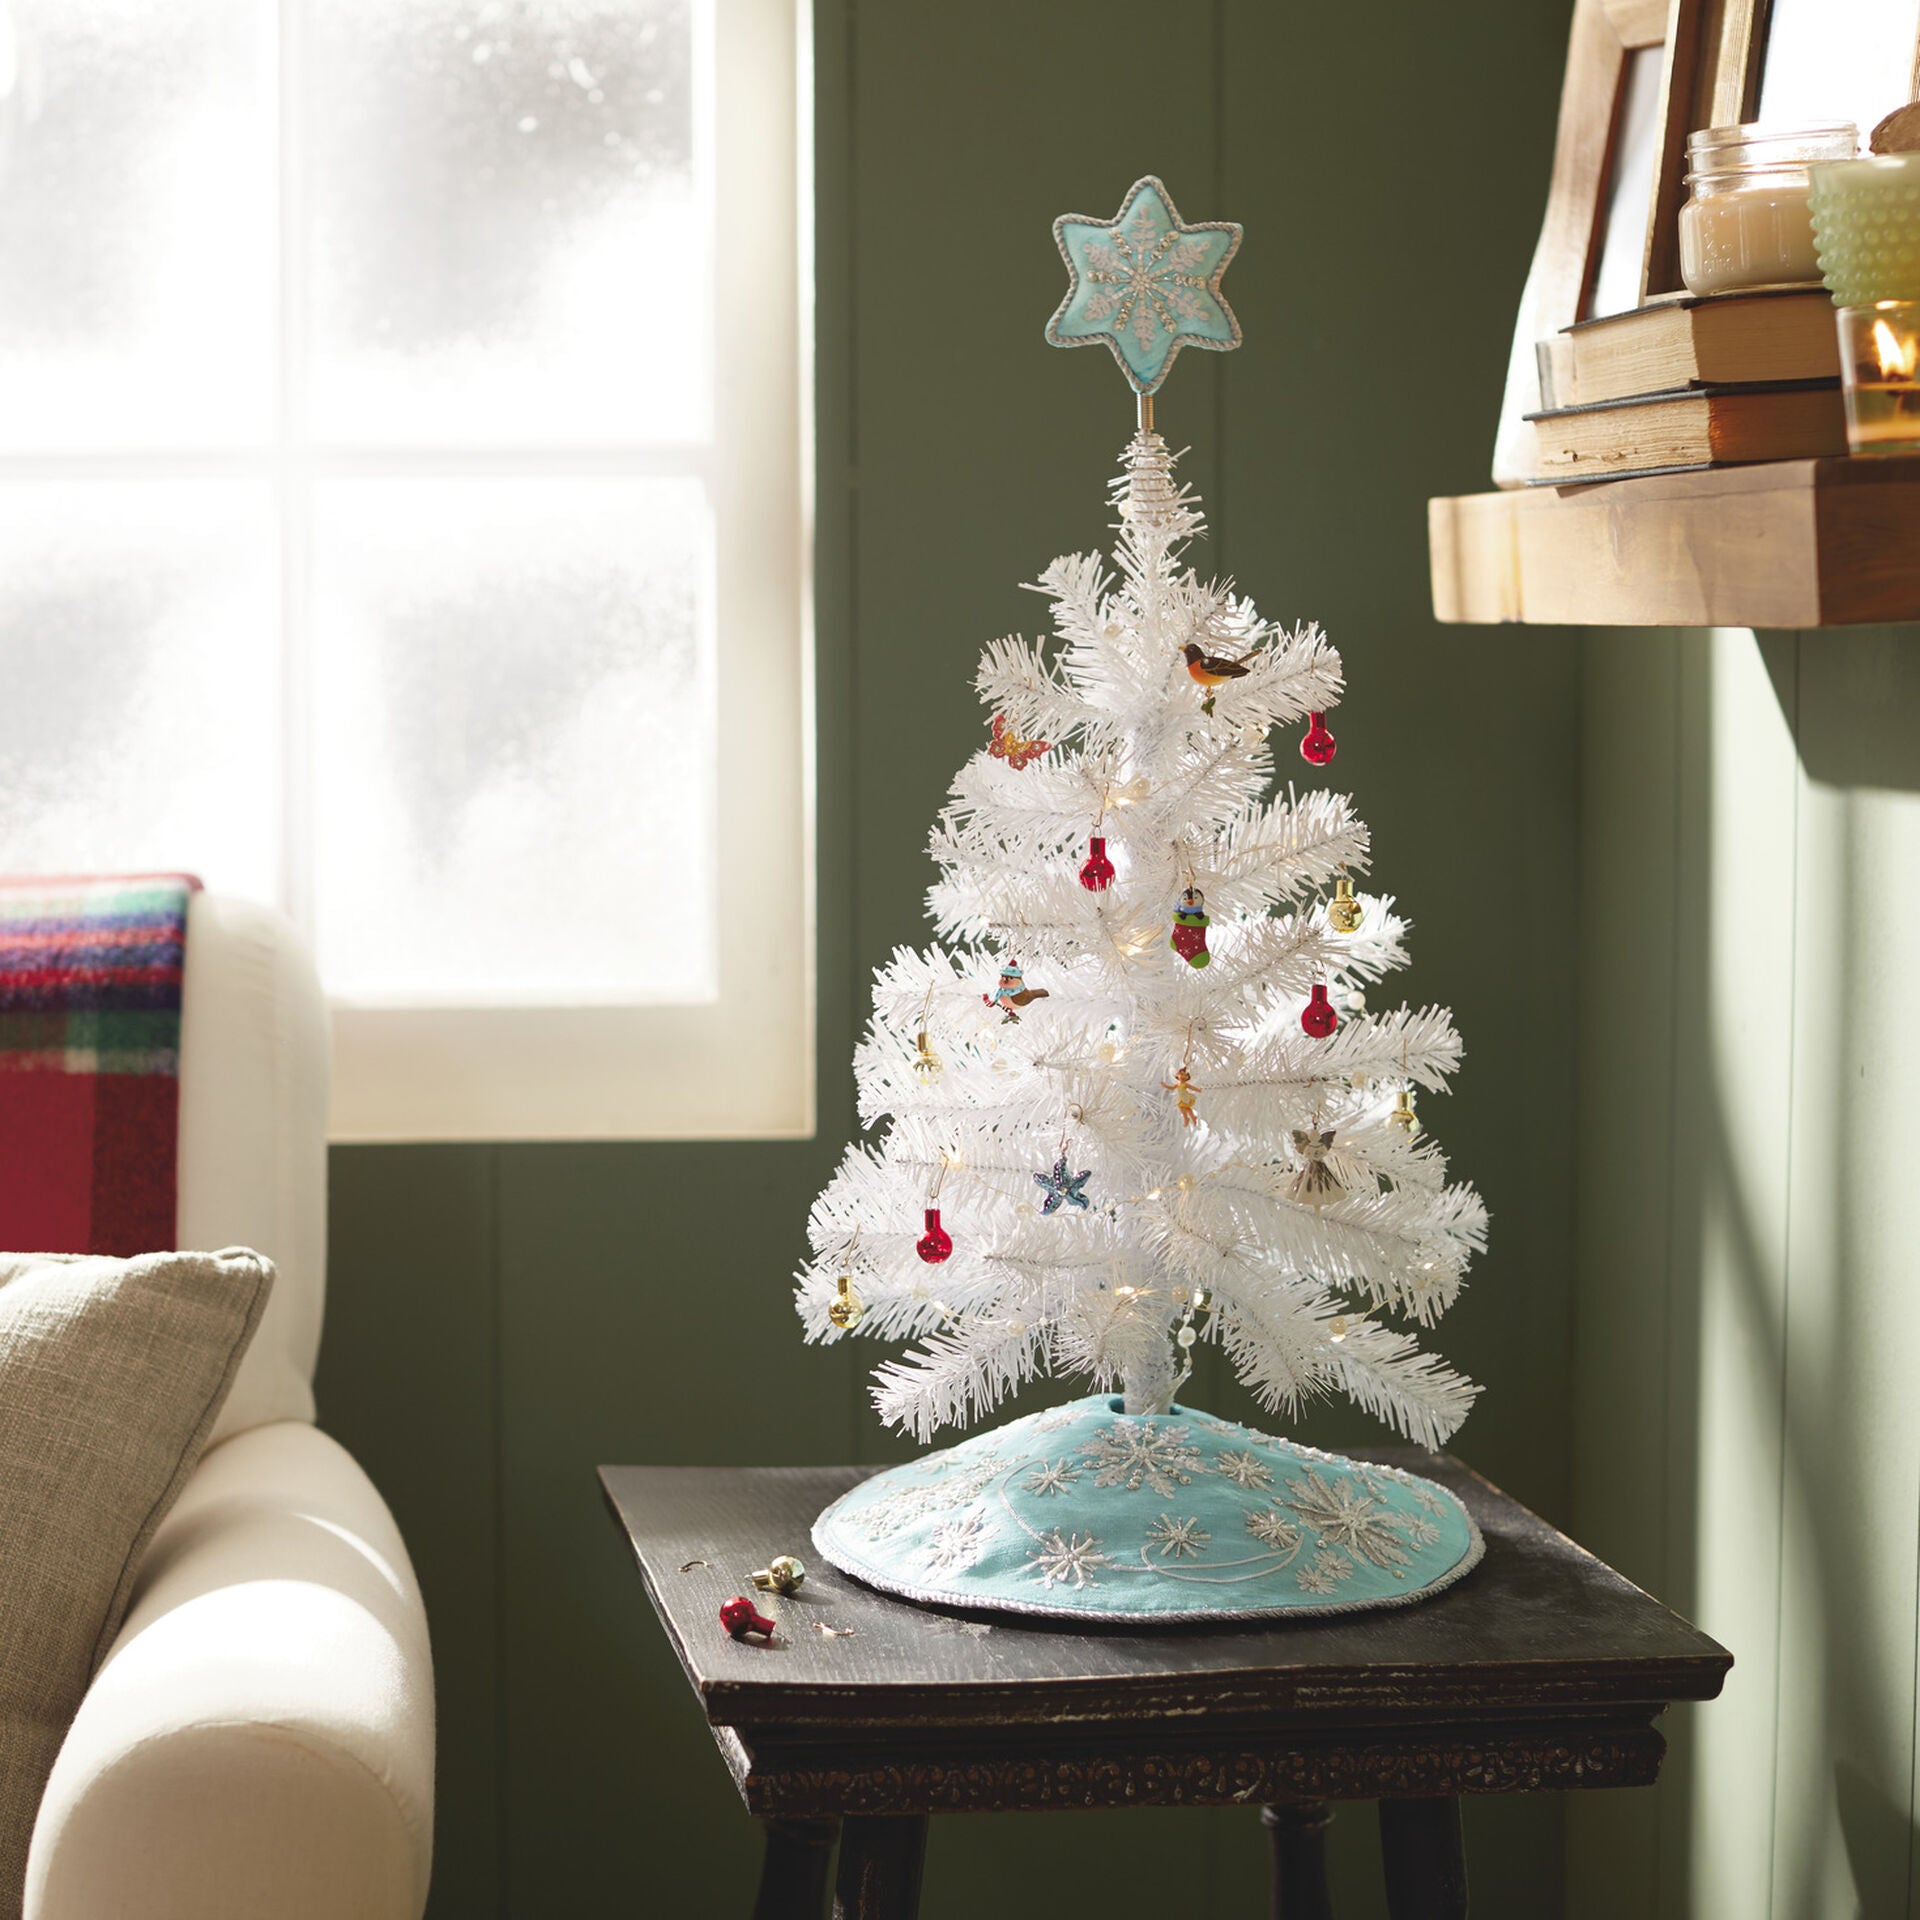 Hallmark Miniature White Pre-Lit Christmas Tree at Hooked on Ornaments